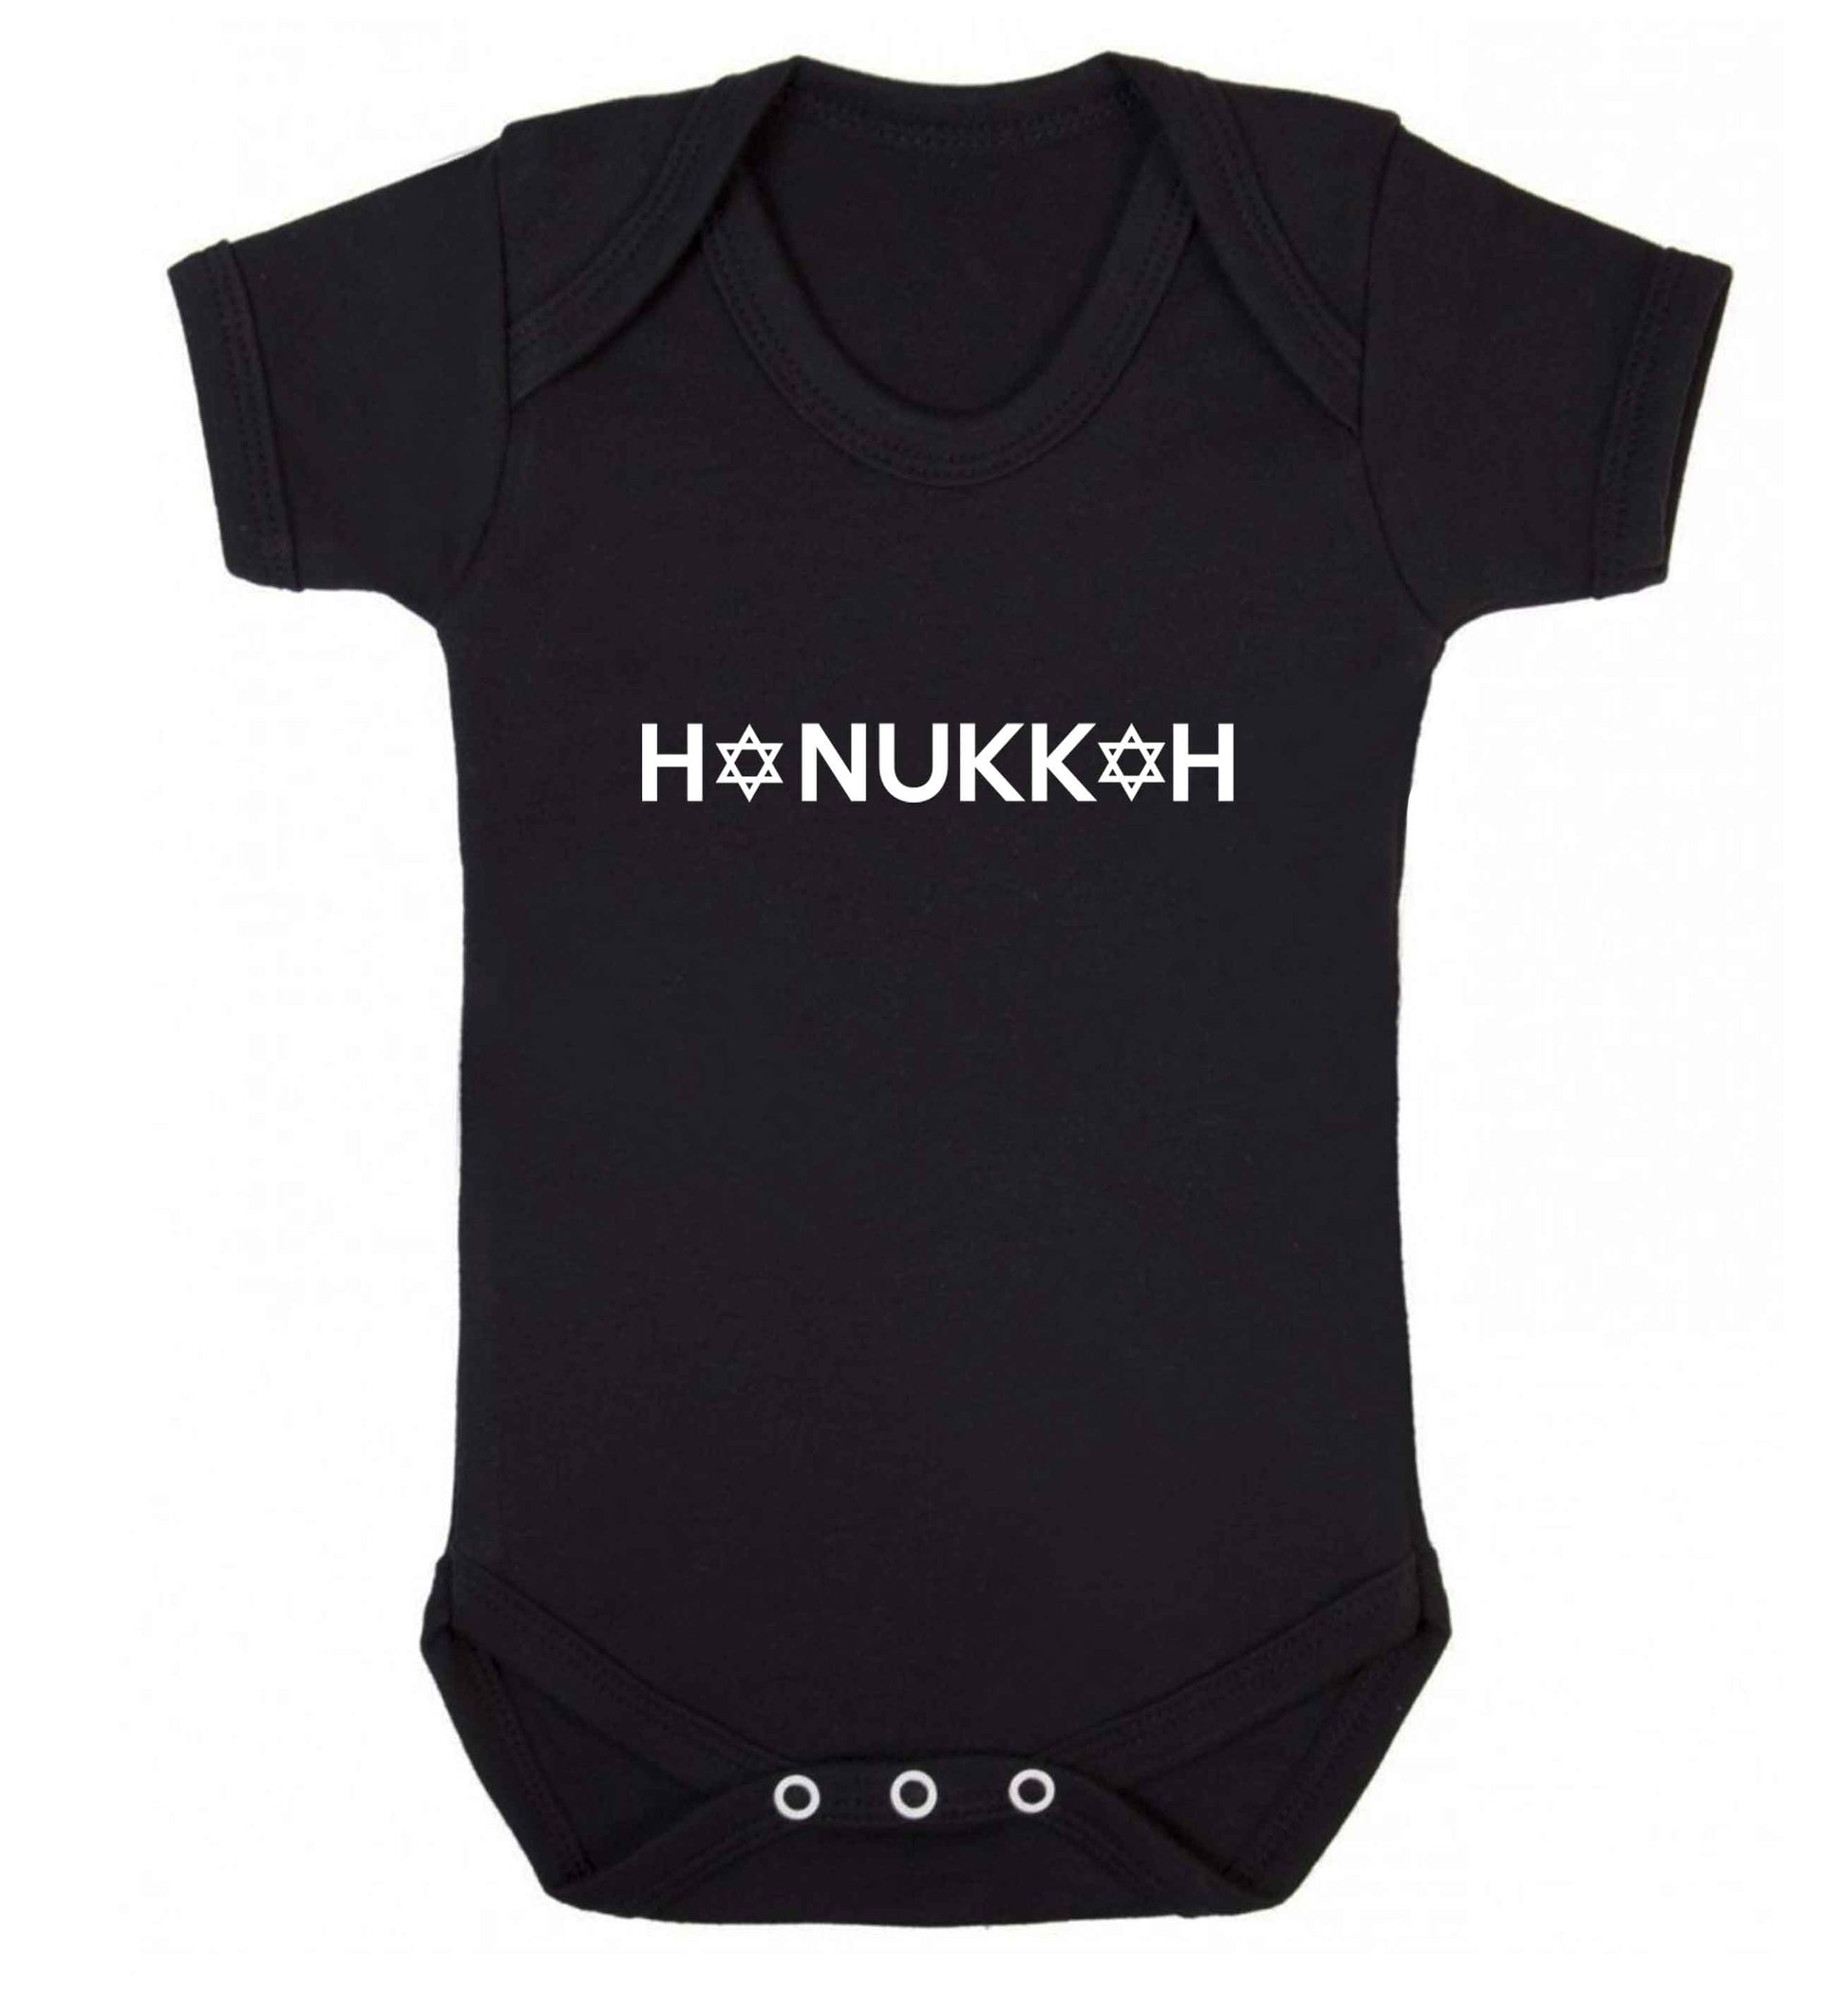 Hanukkah star of david baby vest black 18-24 months